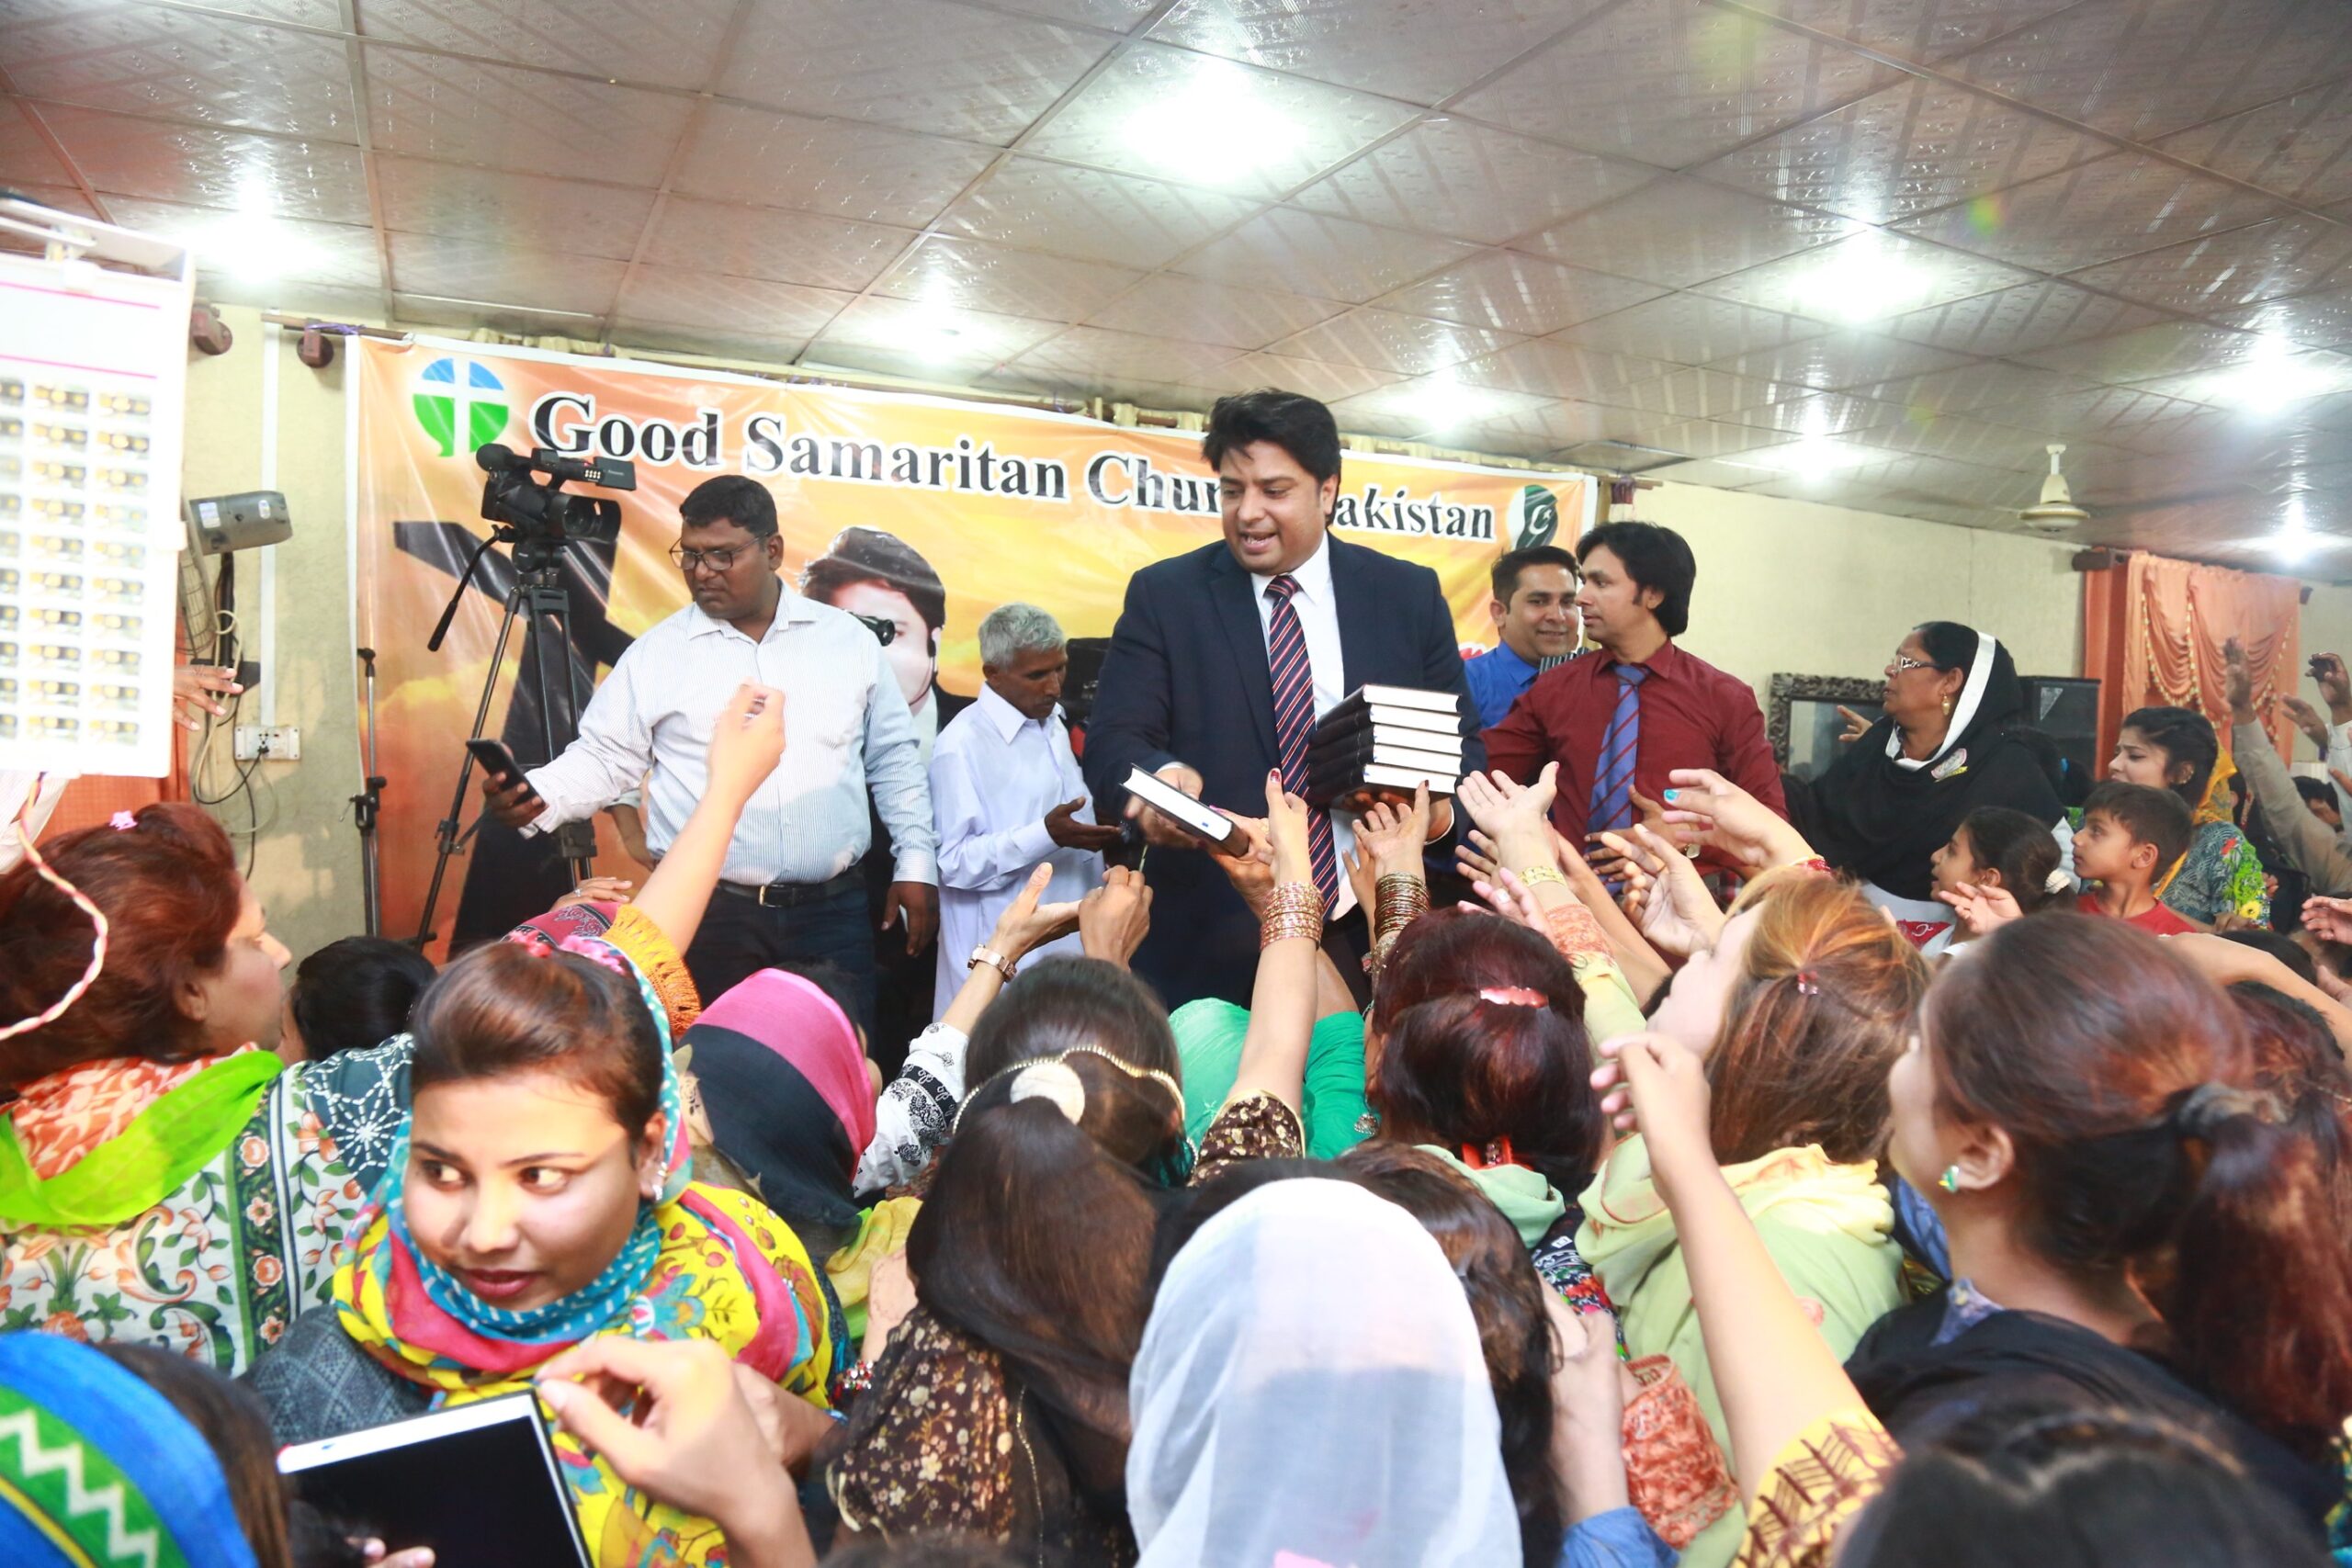 Free Urdu Bibles Distribution in Pakistan During Evangelistic Gospel Crusades.